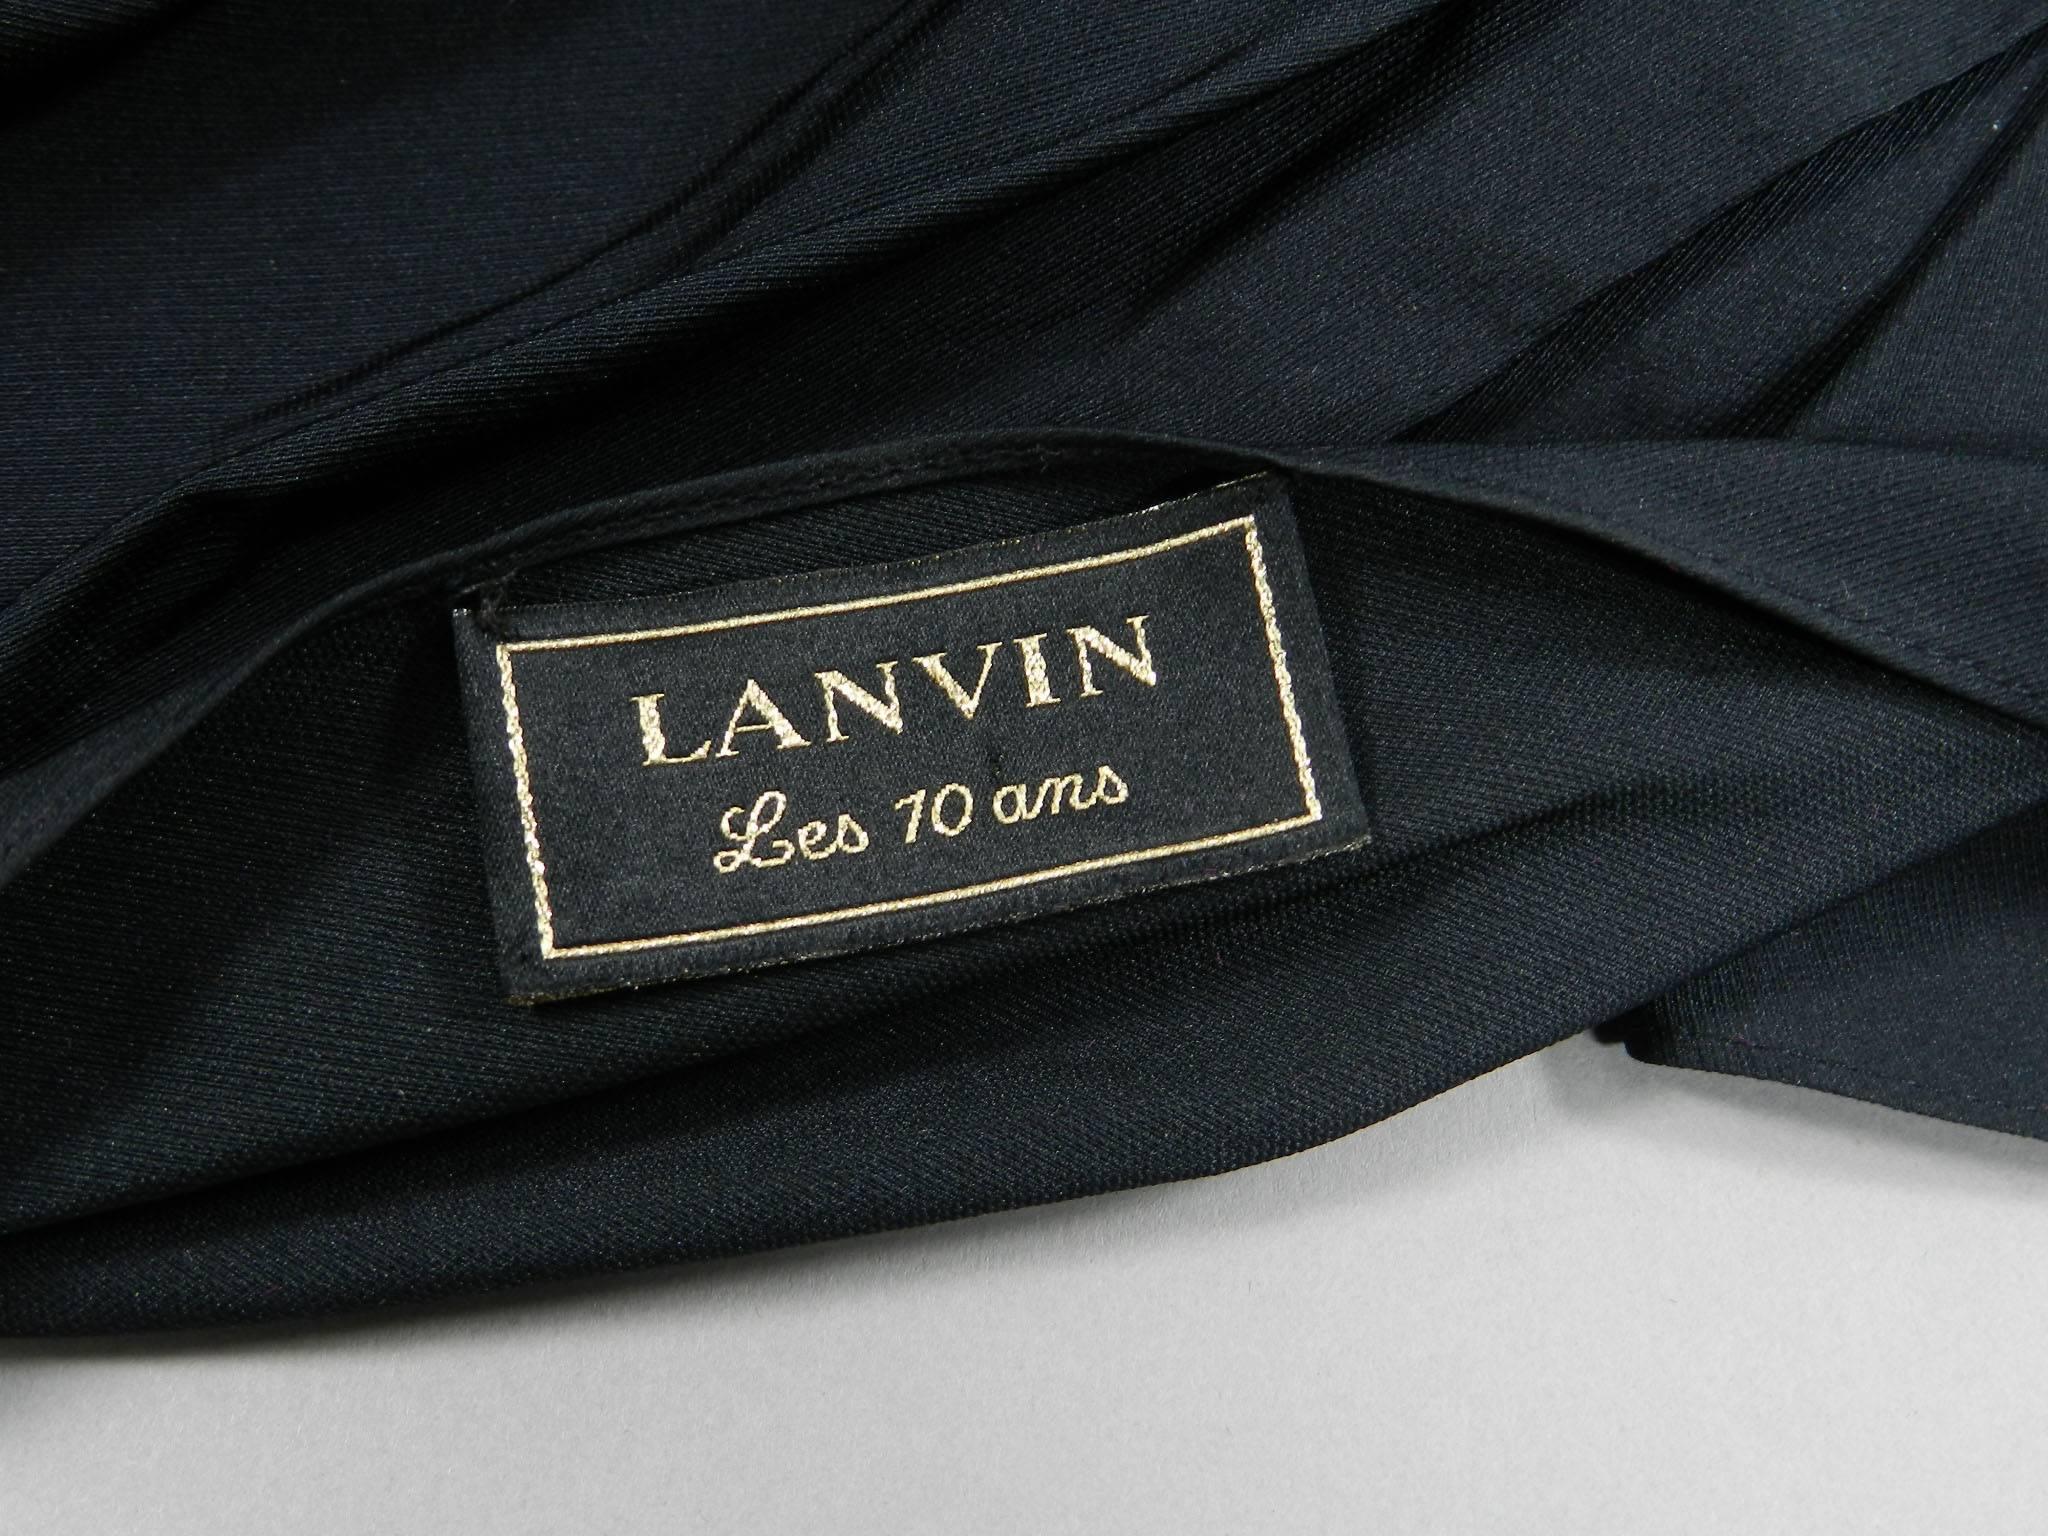 Lanvin Black Ruffle 10 year Anniversary Dress - 2012 1